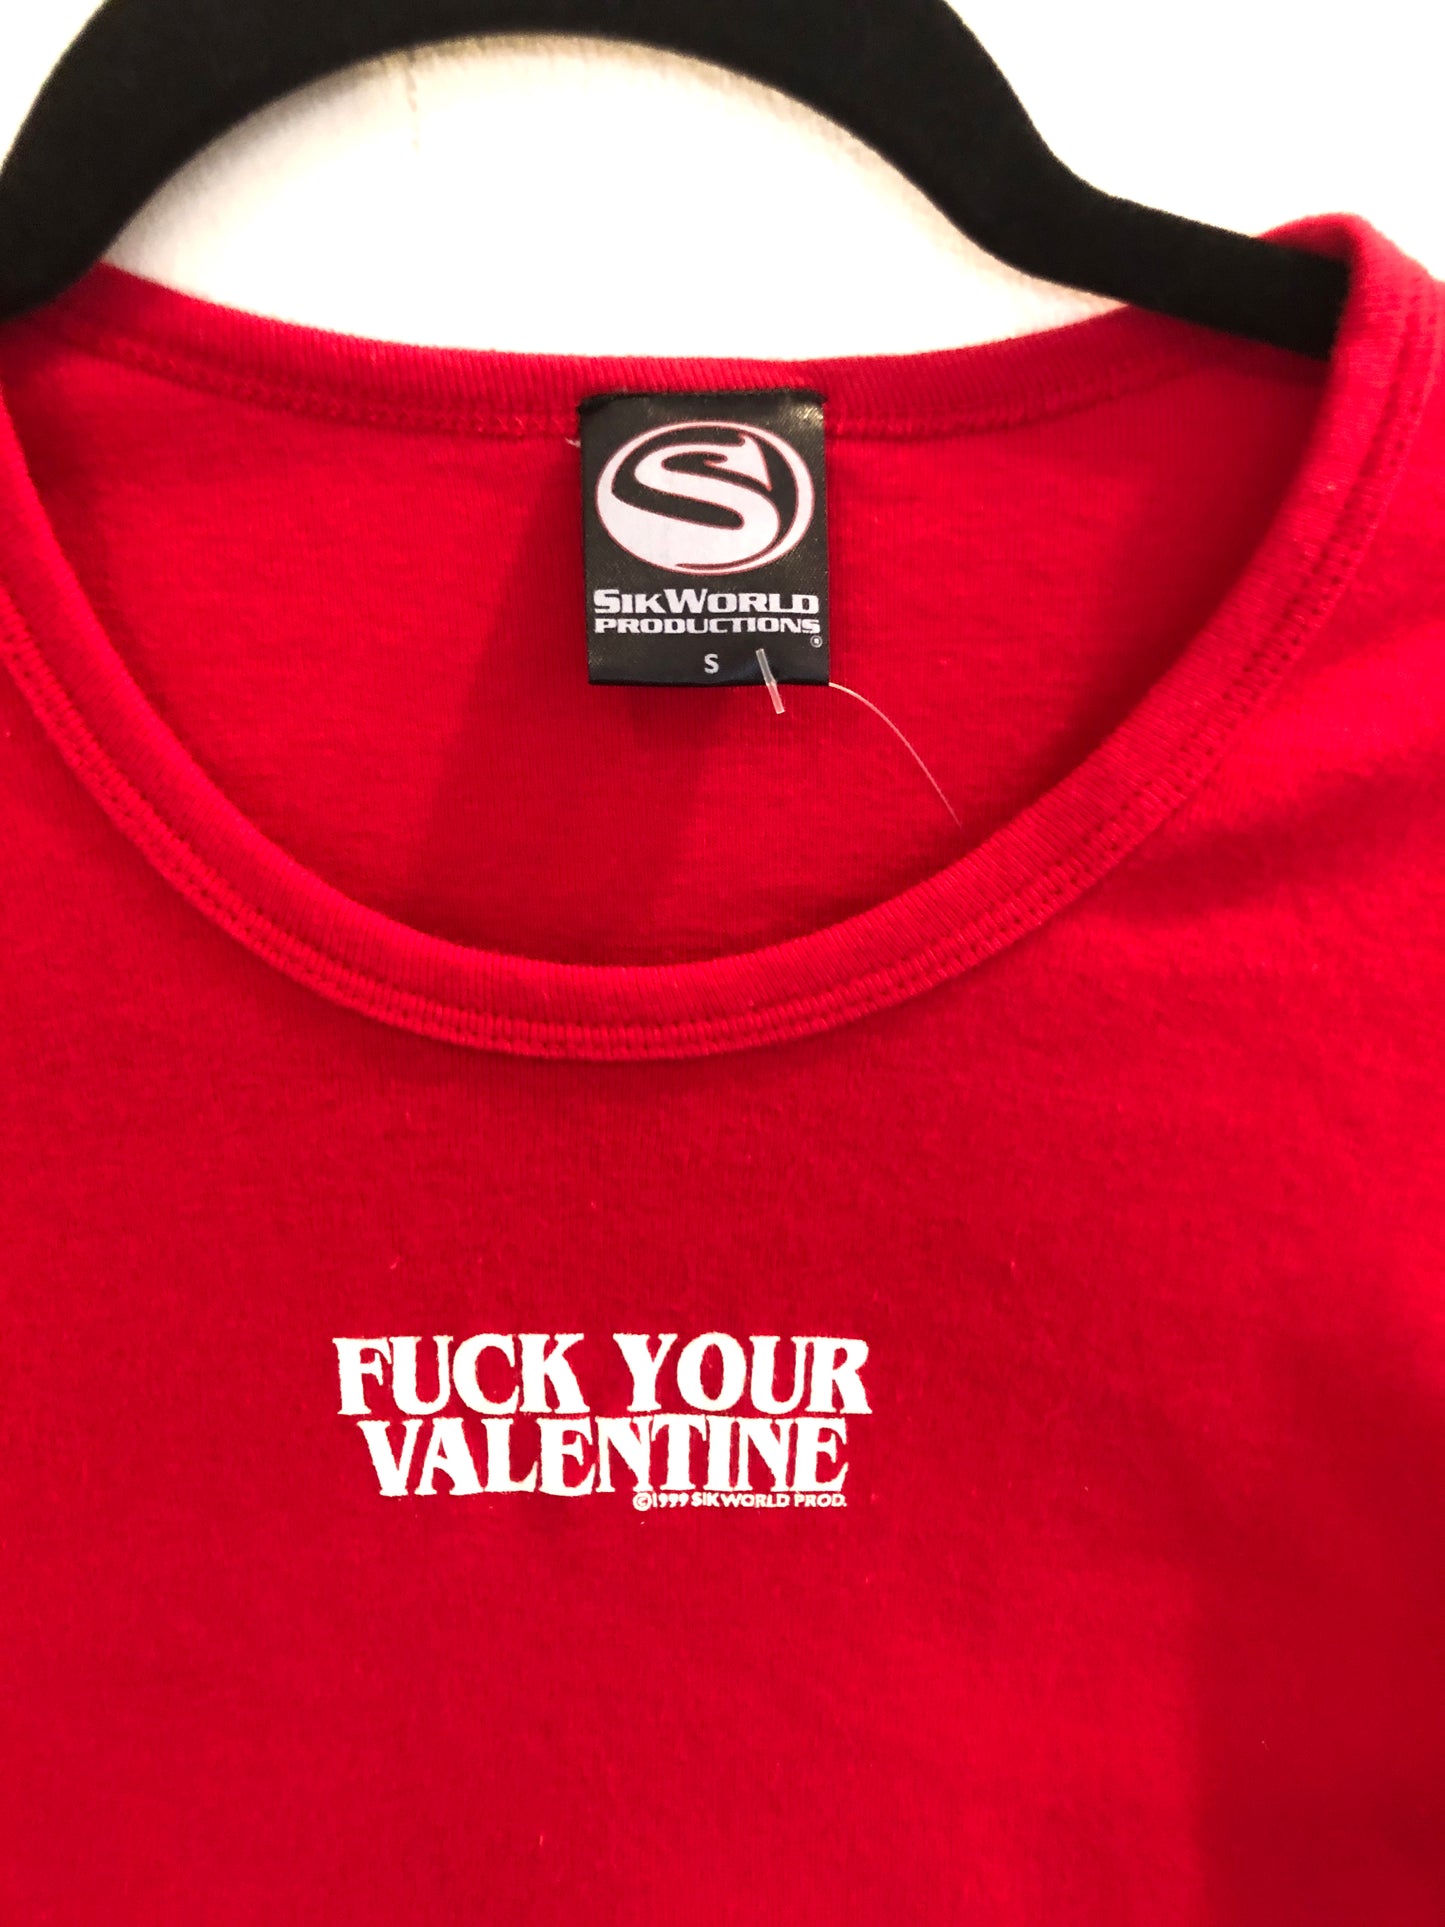 1999 Fuck Your Valentine T-Shirt